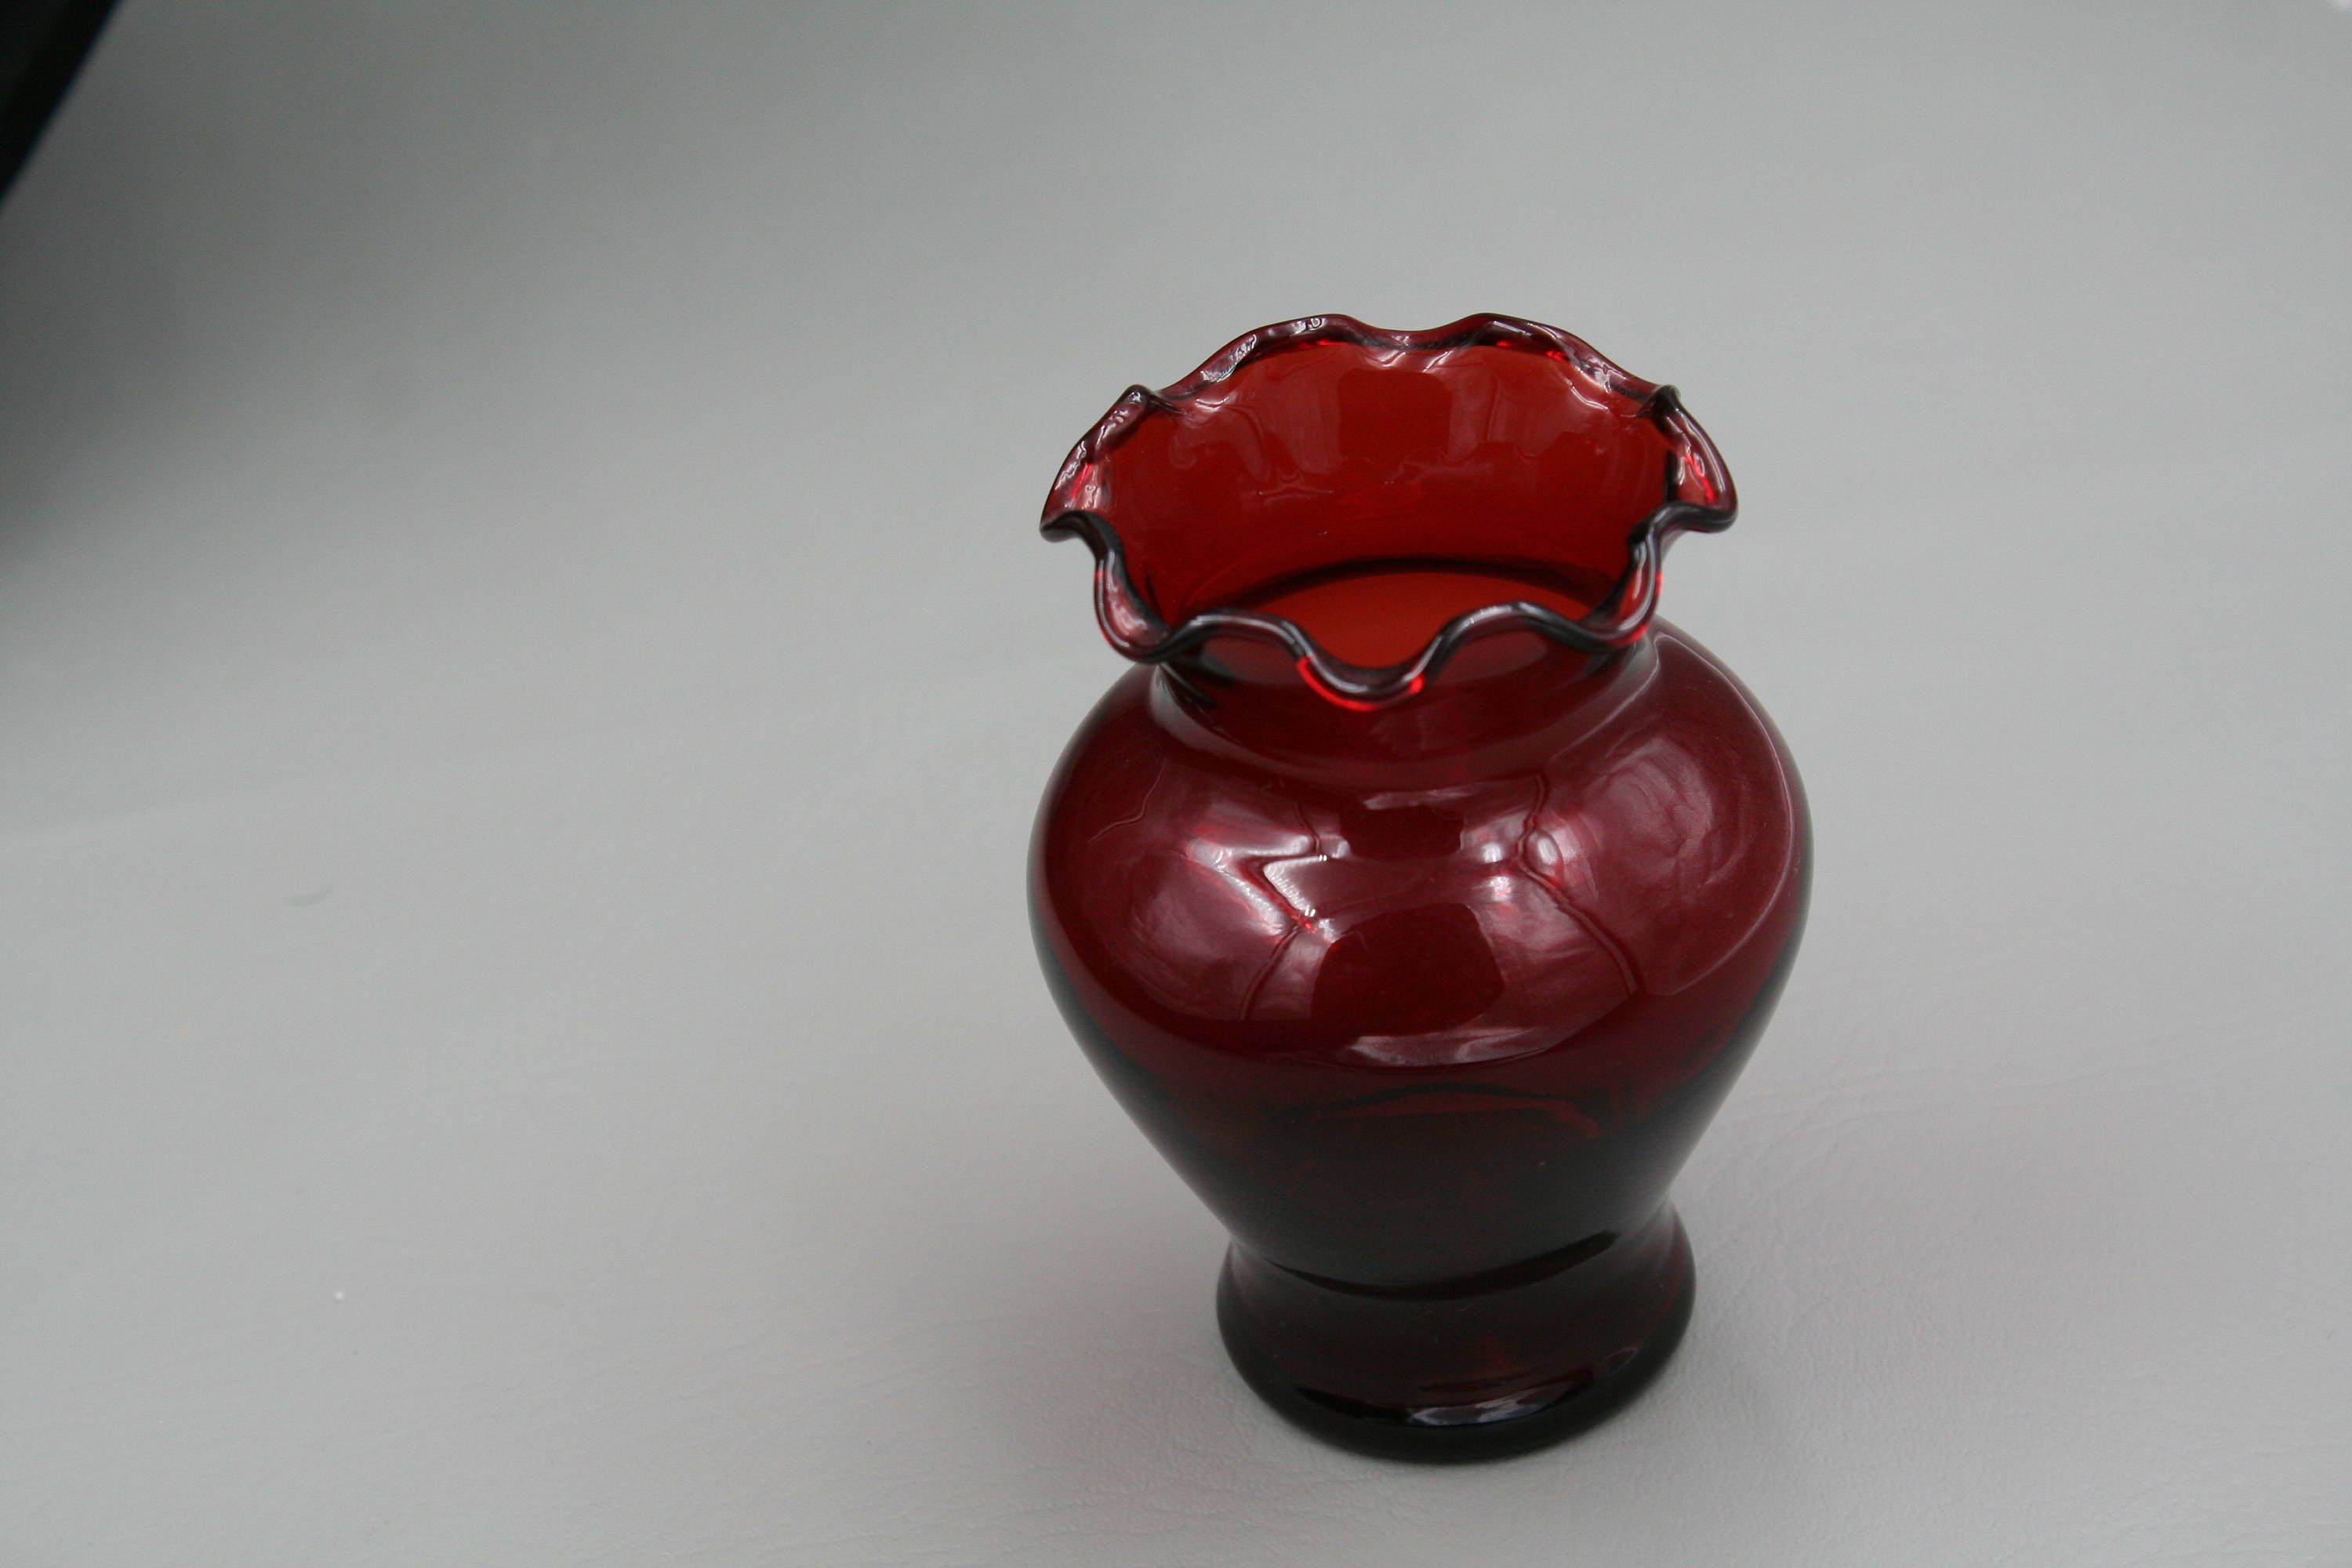 26 Lovable Plastic Urn Vase 2024 free download plastic urn vase of 21 glass vase with lid the weekly world intended for cranberry red glass vase